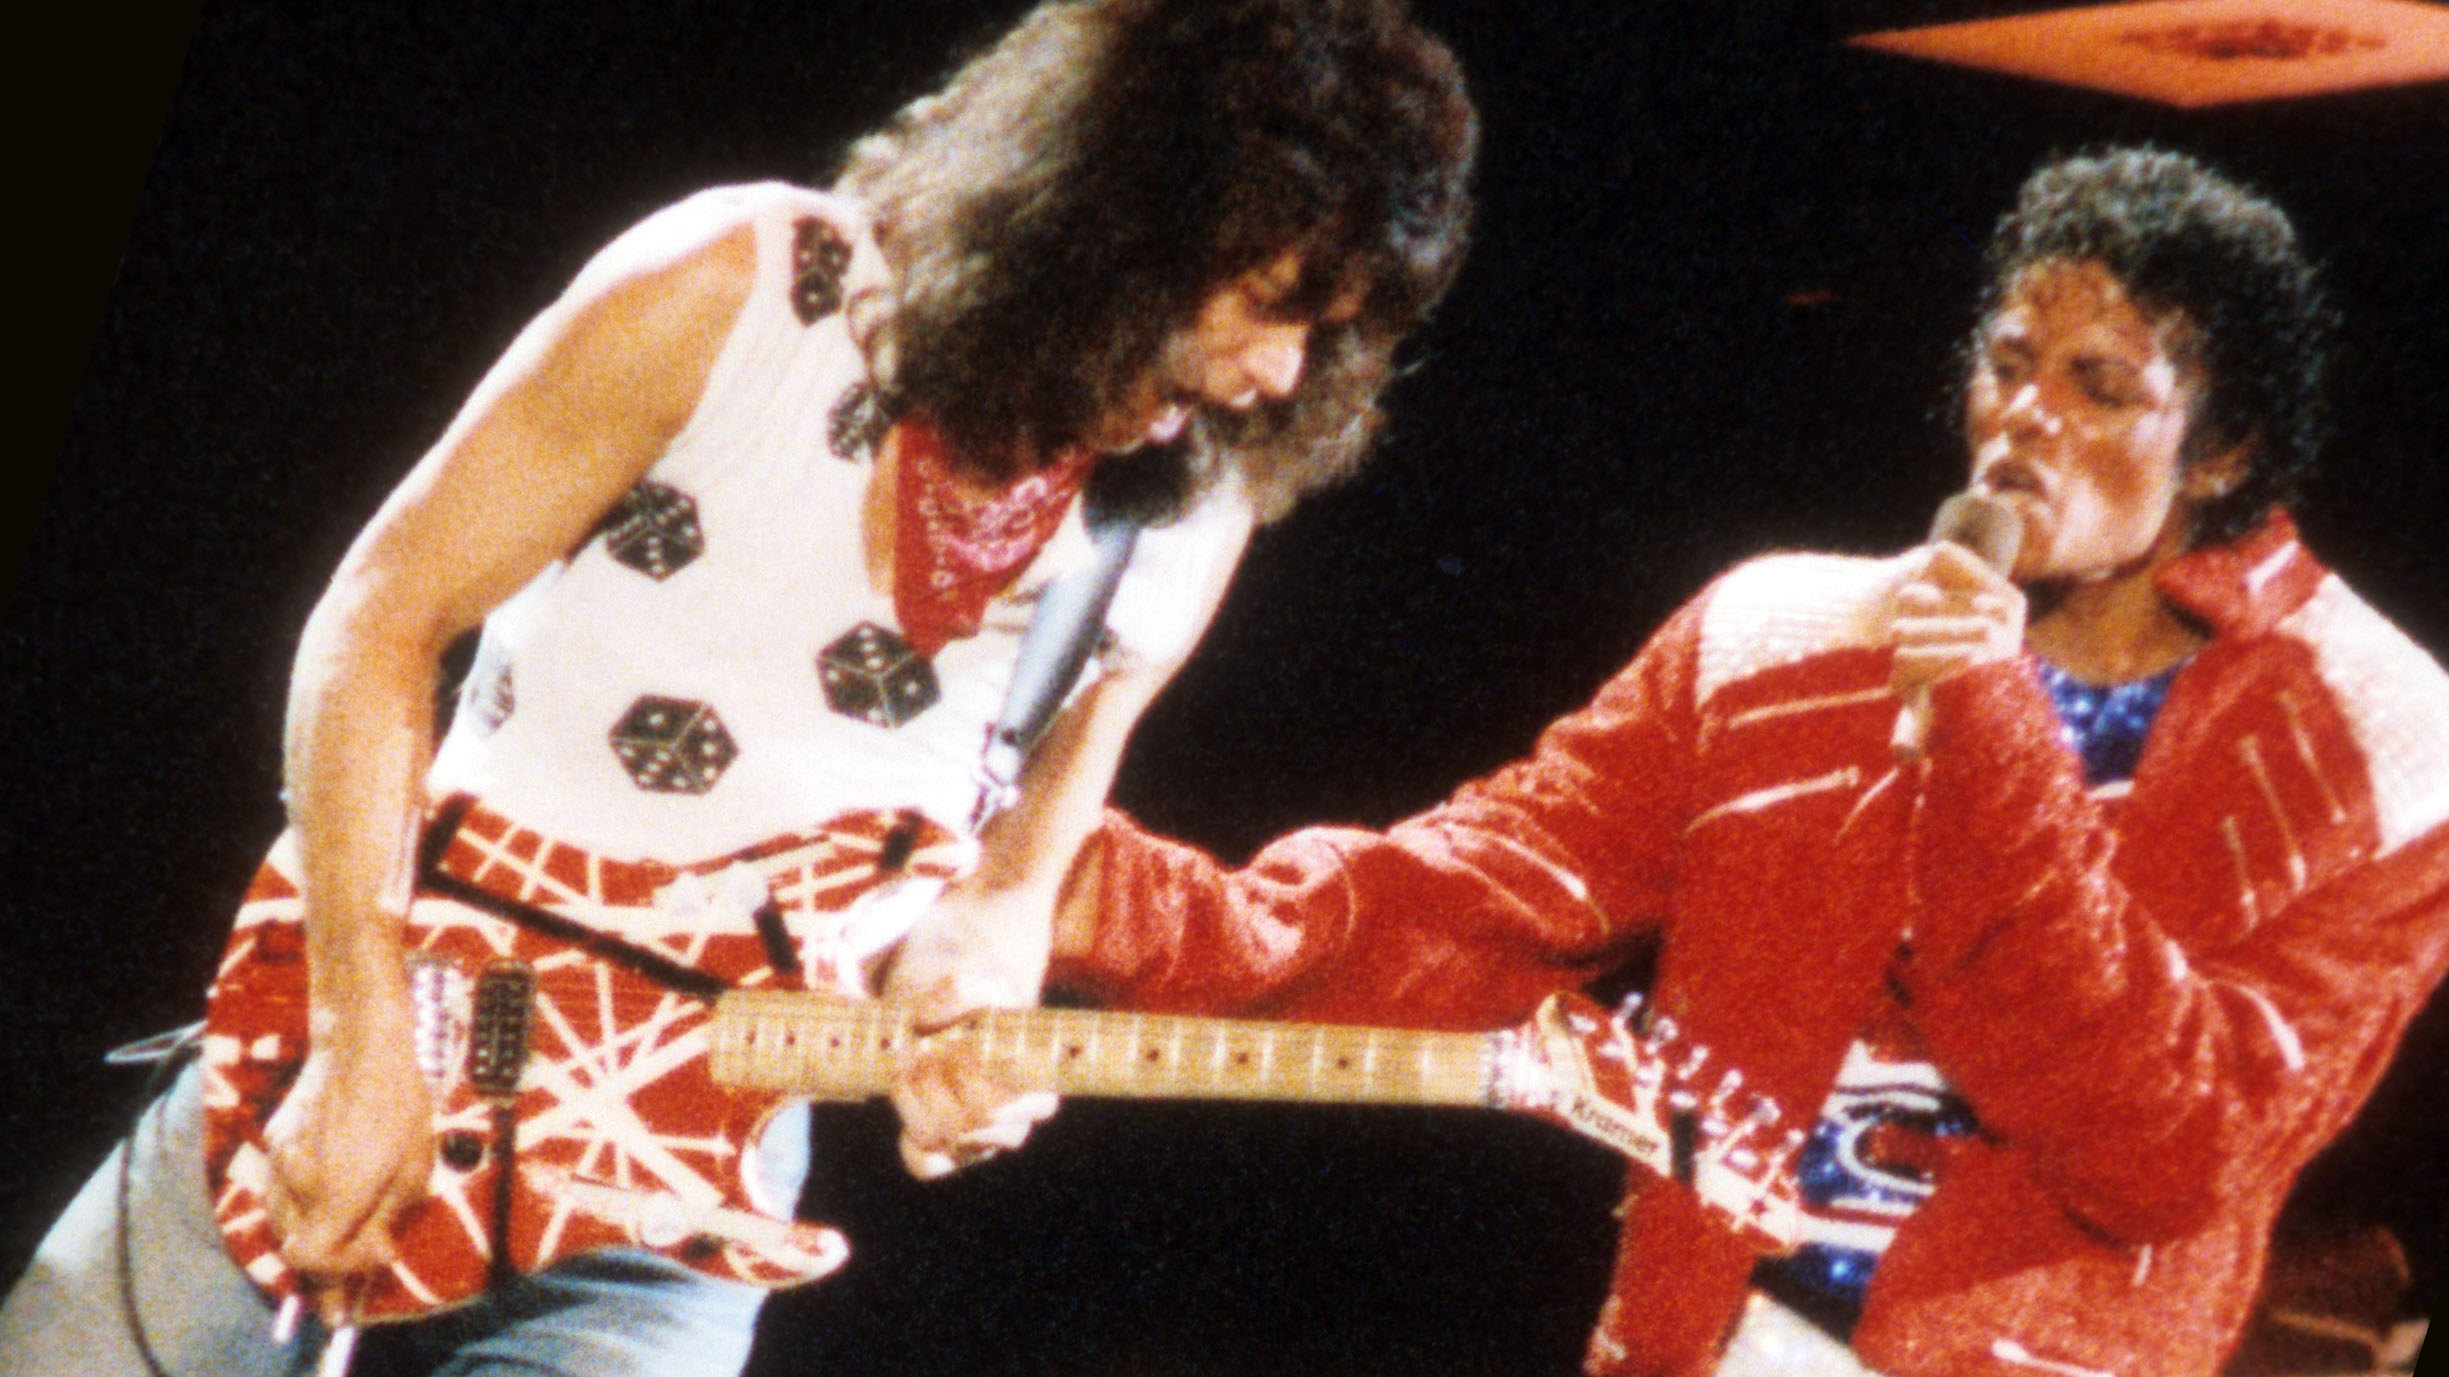 The incredible story of Eddie Van Halen’s Beat It solo